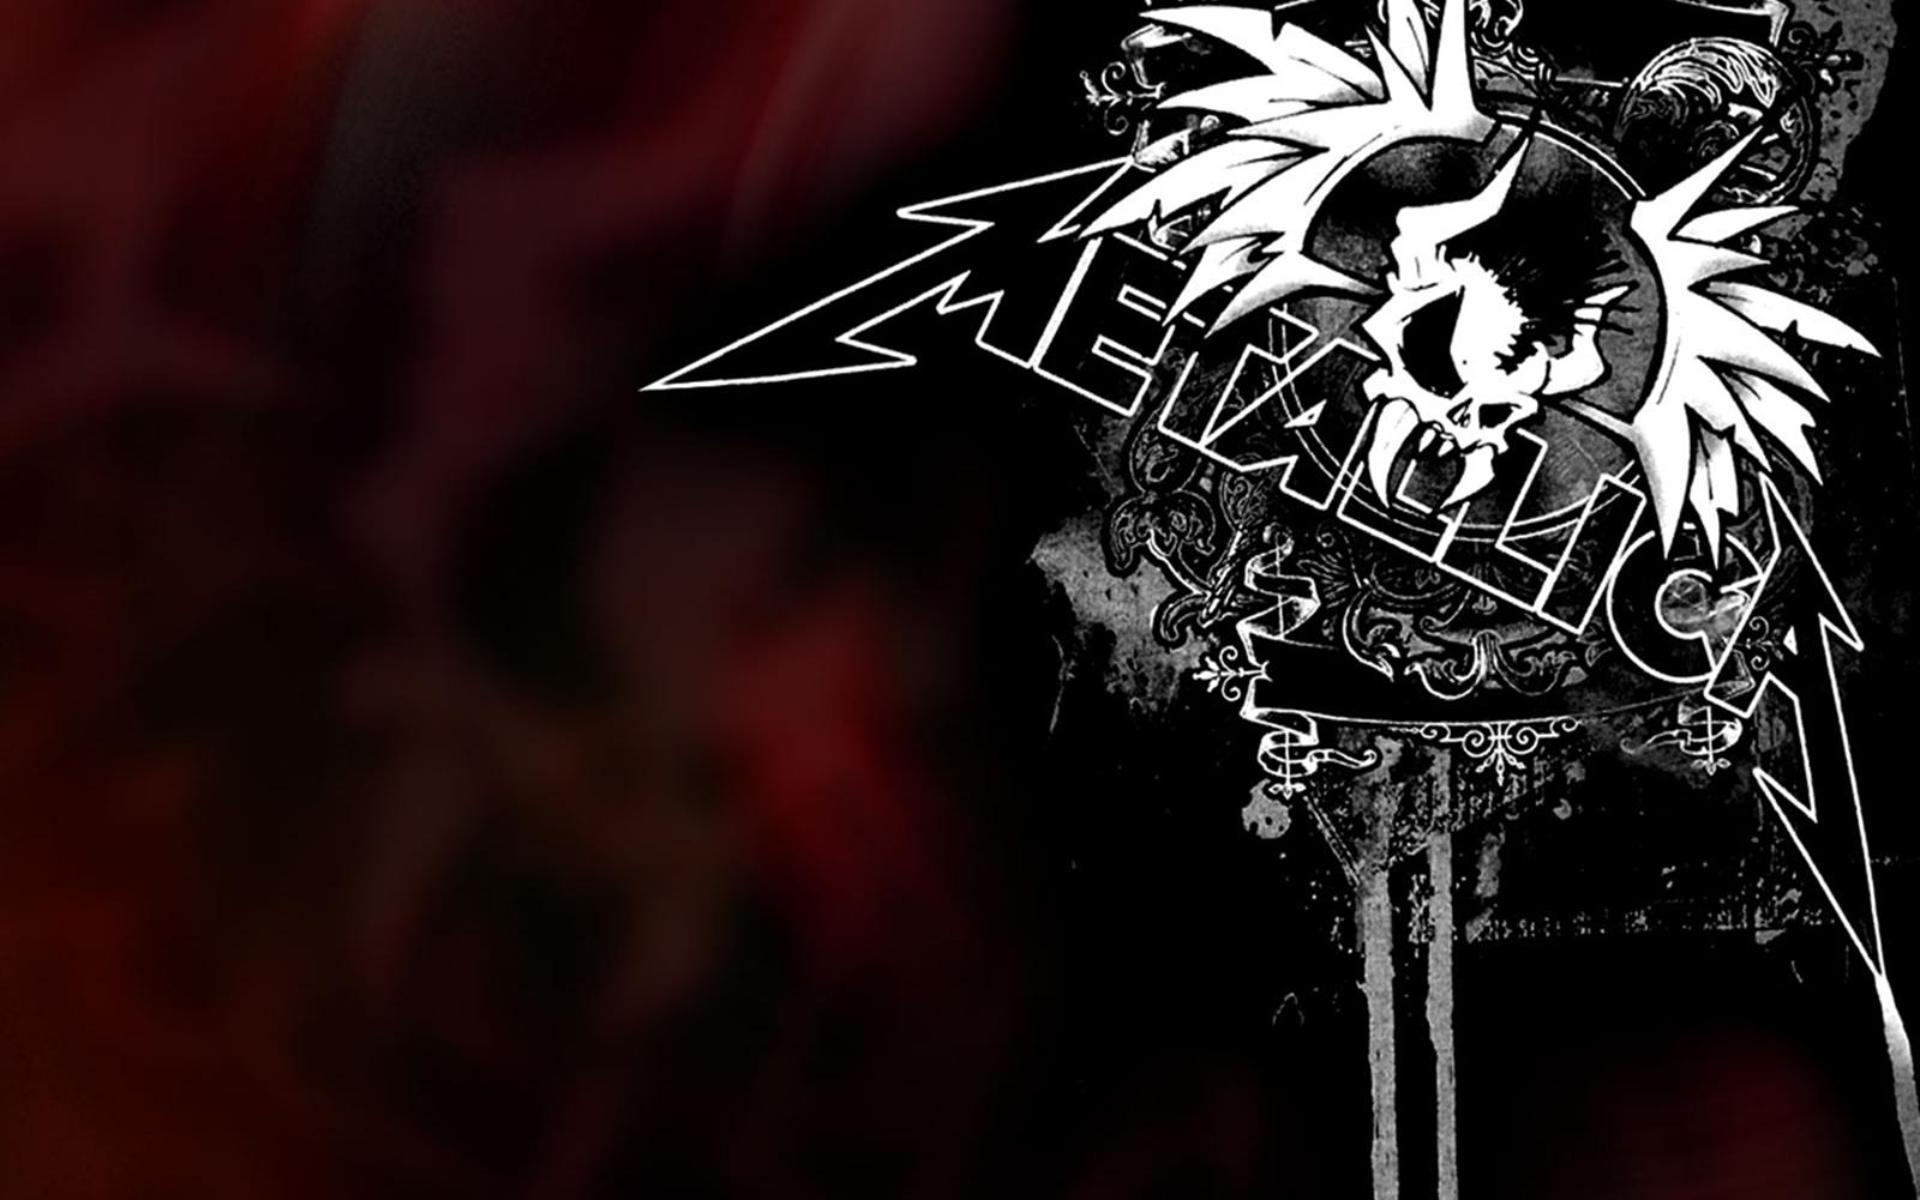 Metallica Logo Wallpaper